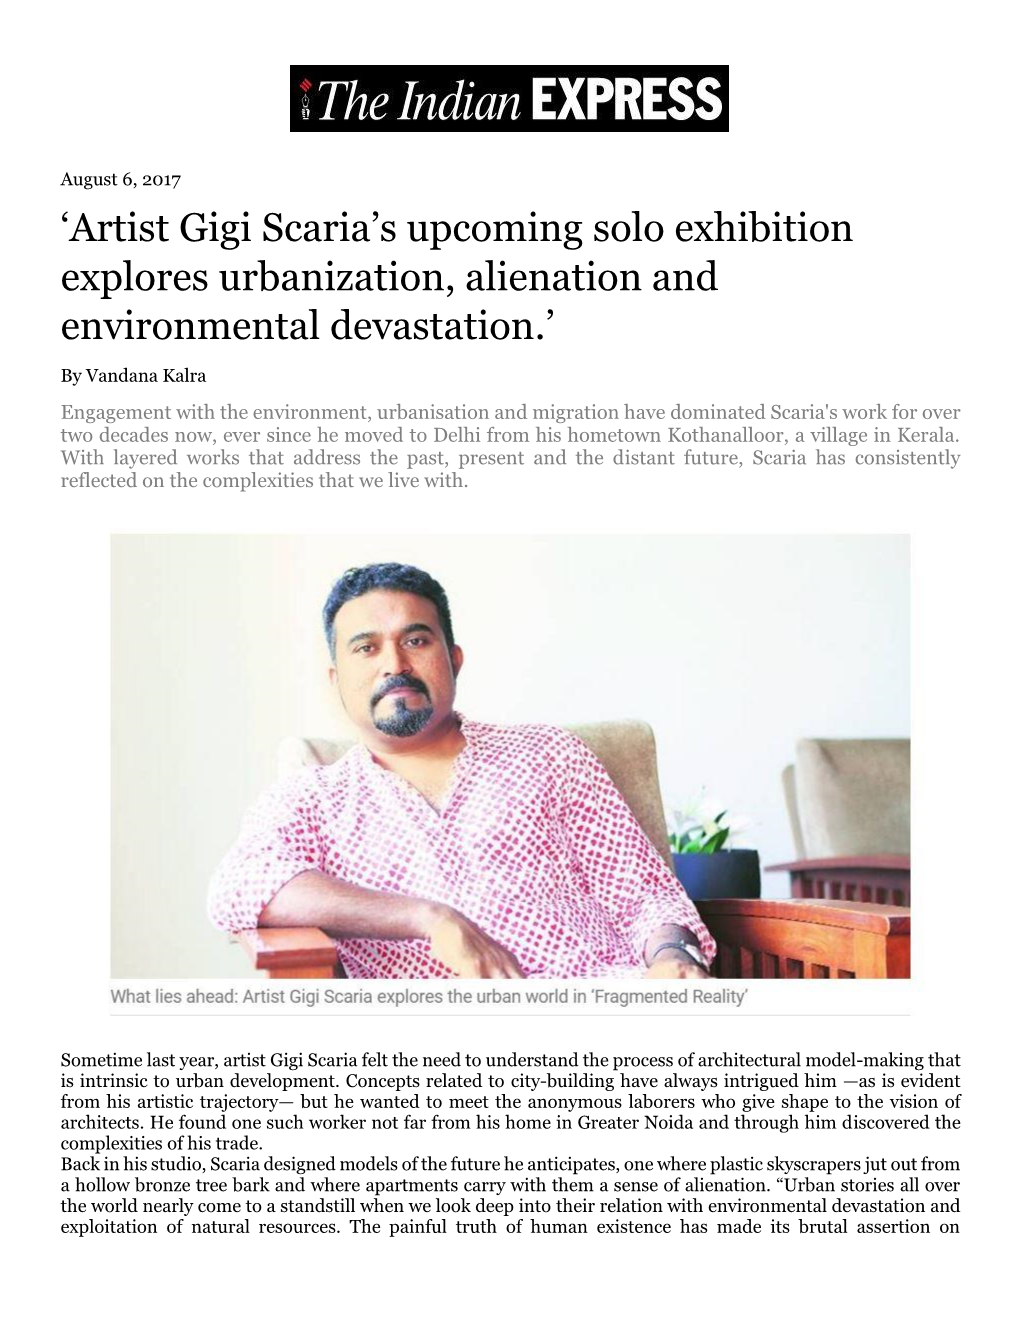 'Artist Gigi Scaria's Upcoming Solo Exhibition Explores Urbanization, Alienation and Environmental Devastation.'